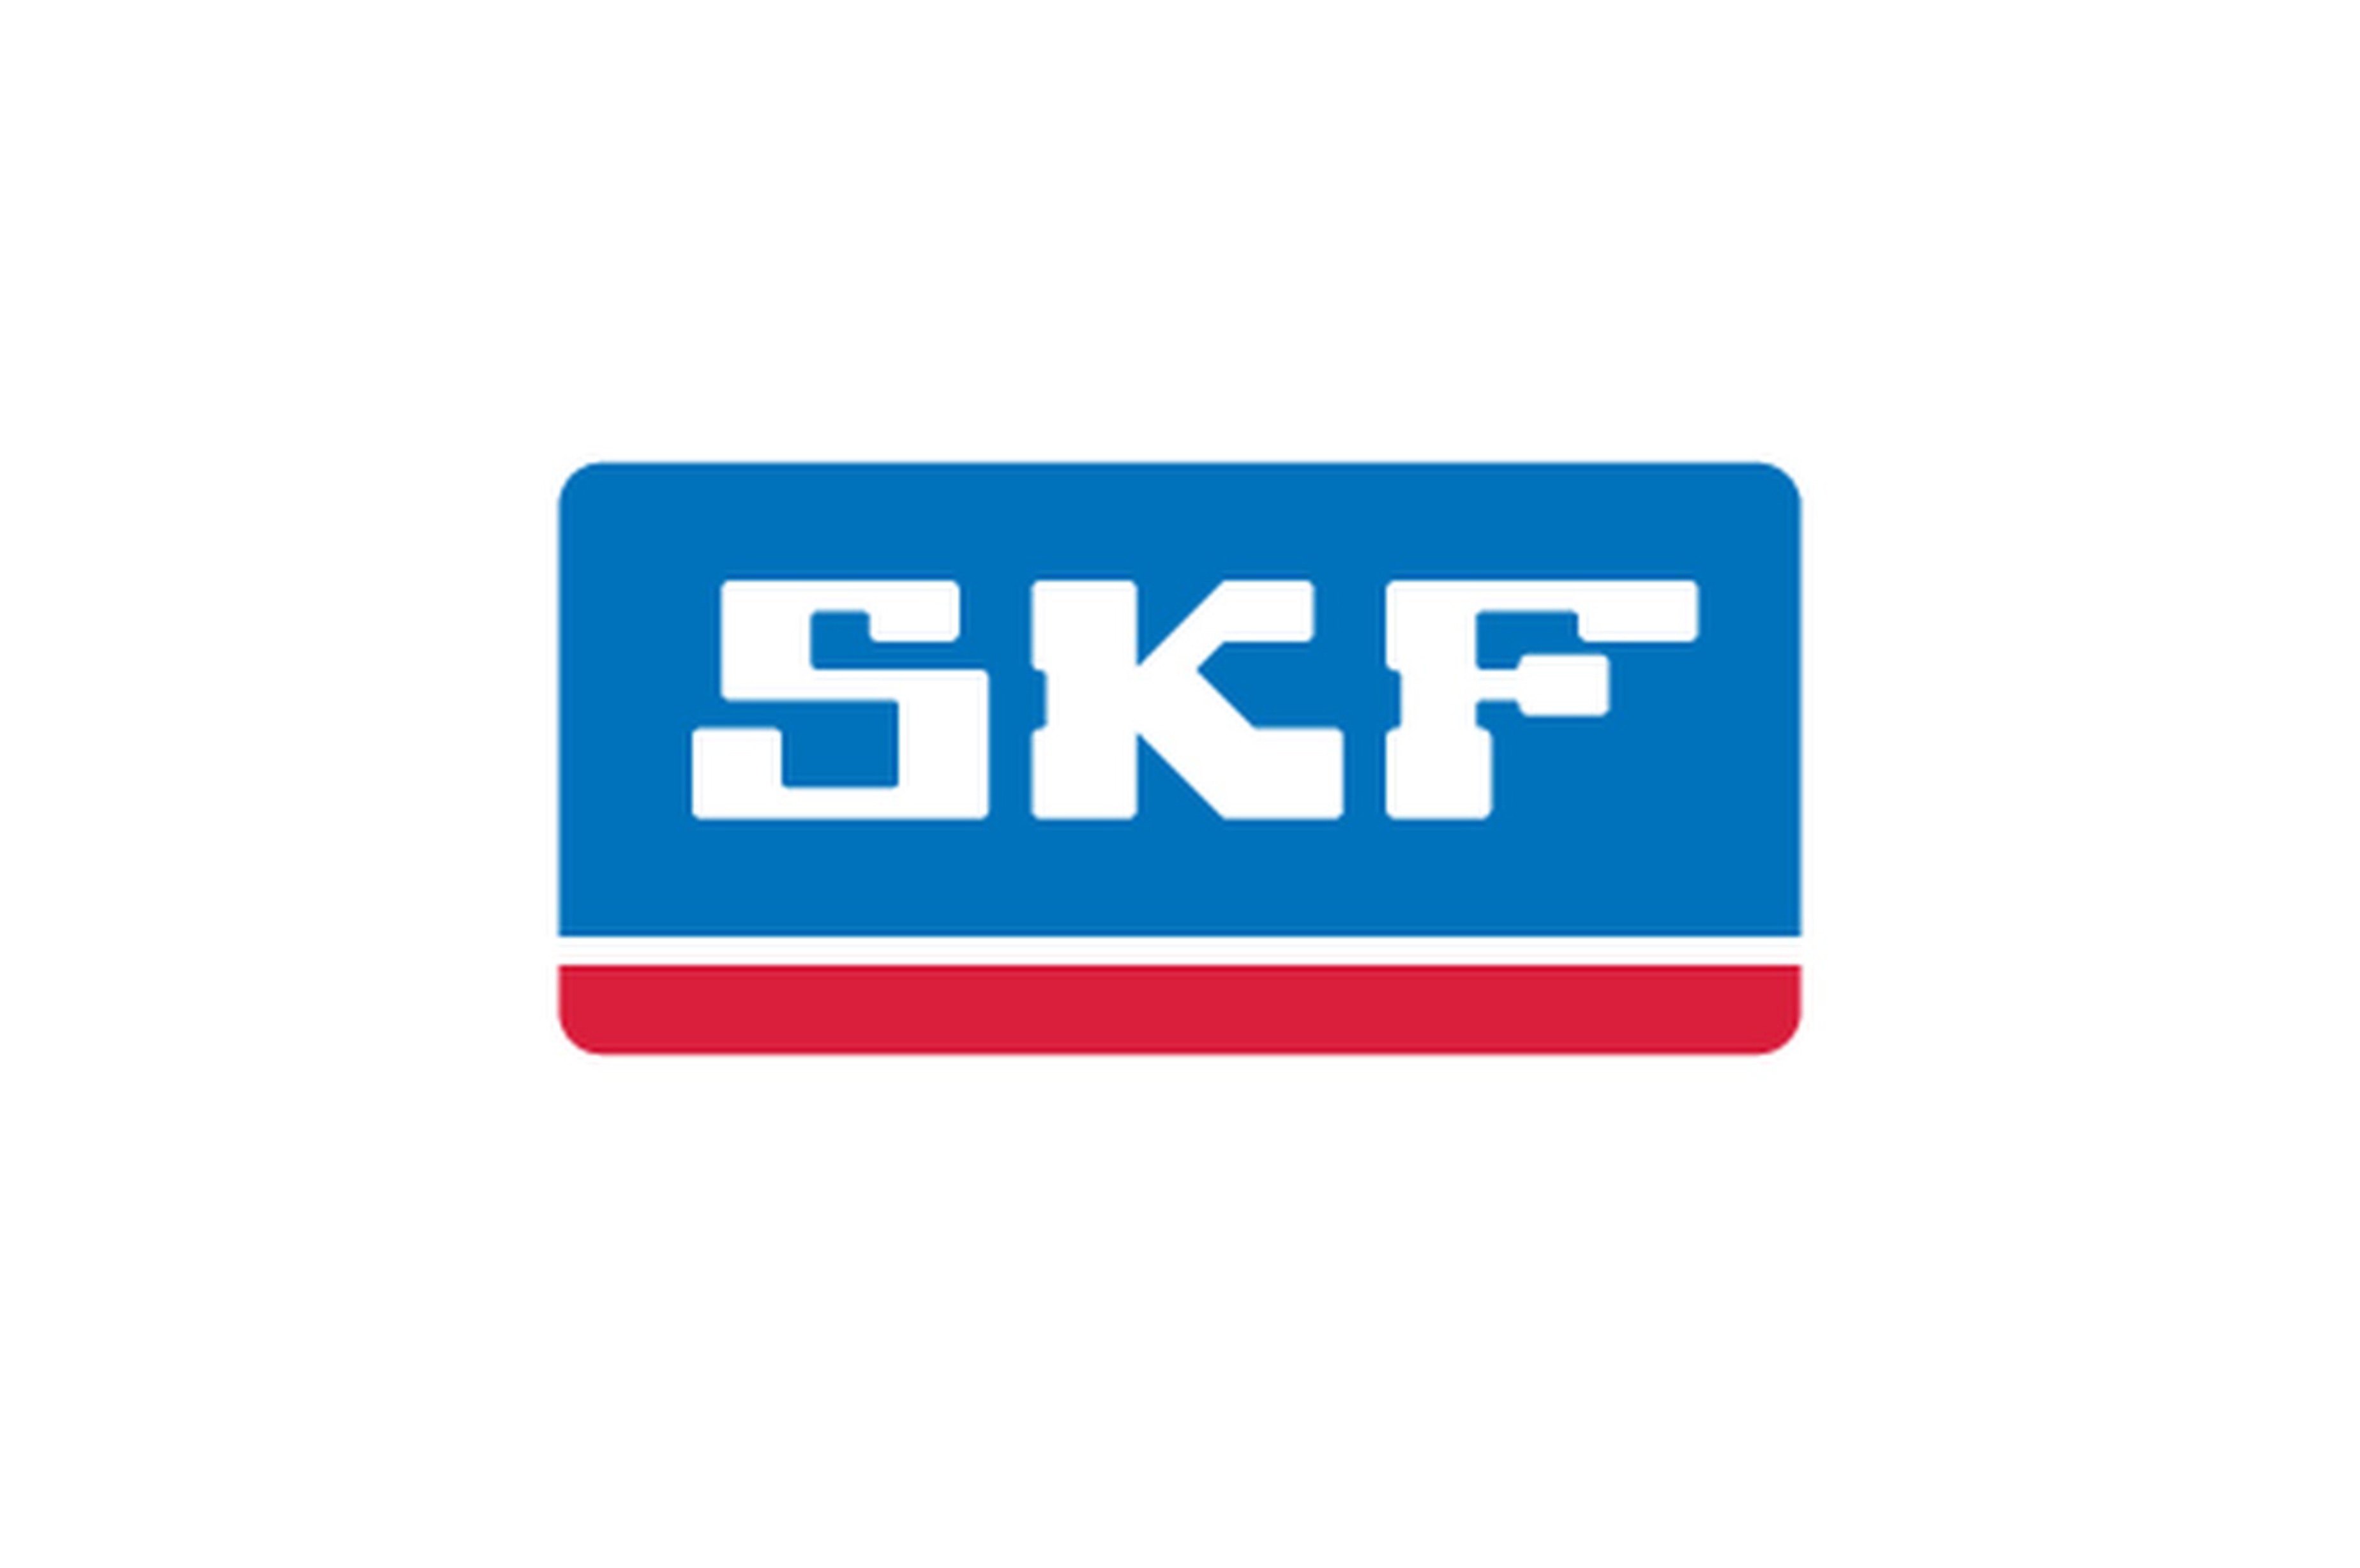 The brands SKF